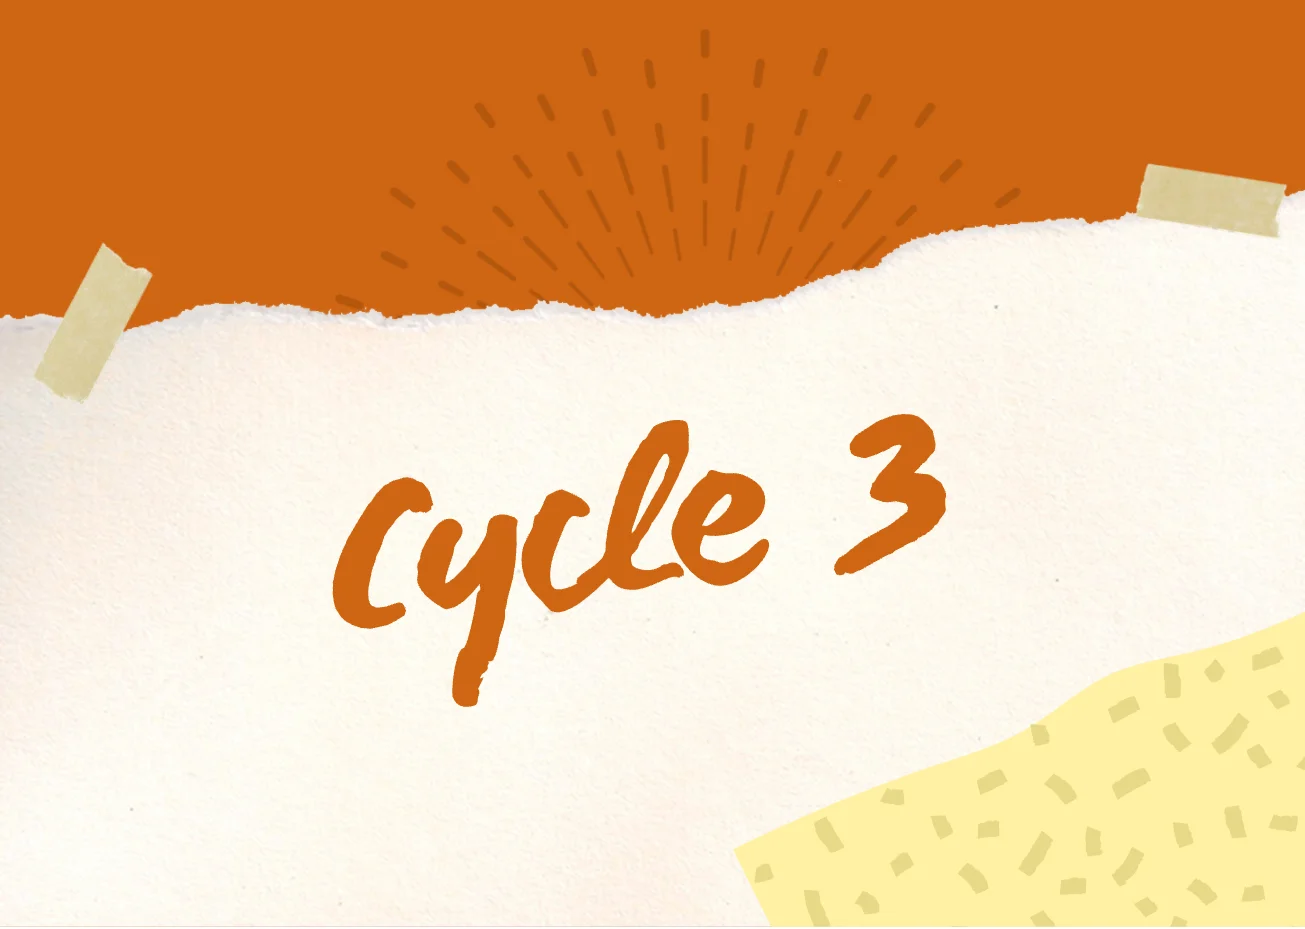 Cycle 3